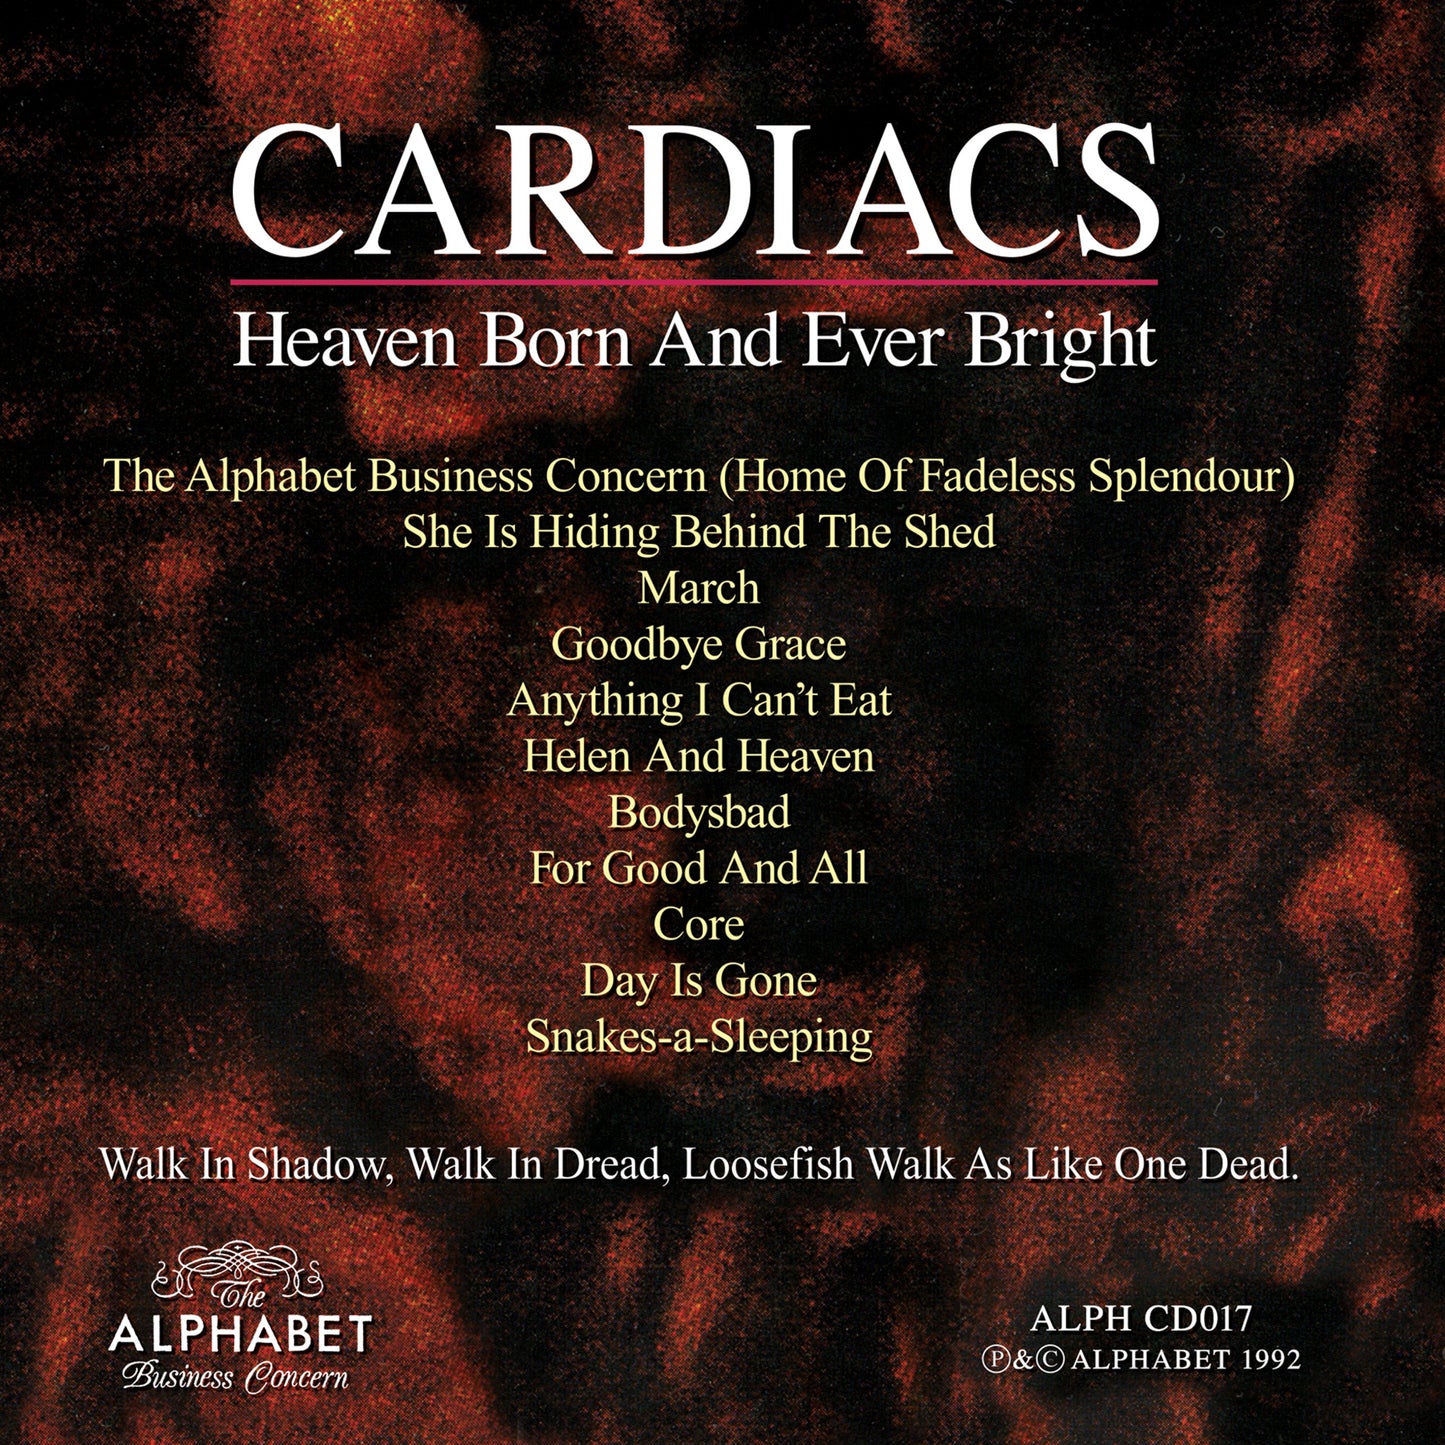 Heaven Born and Ever Bright: CD digifile